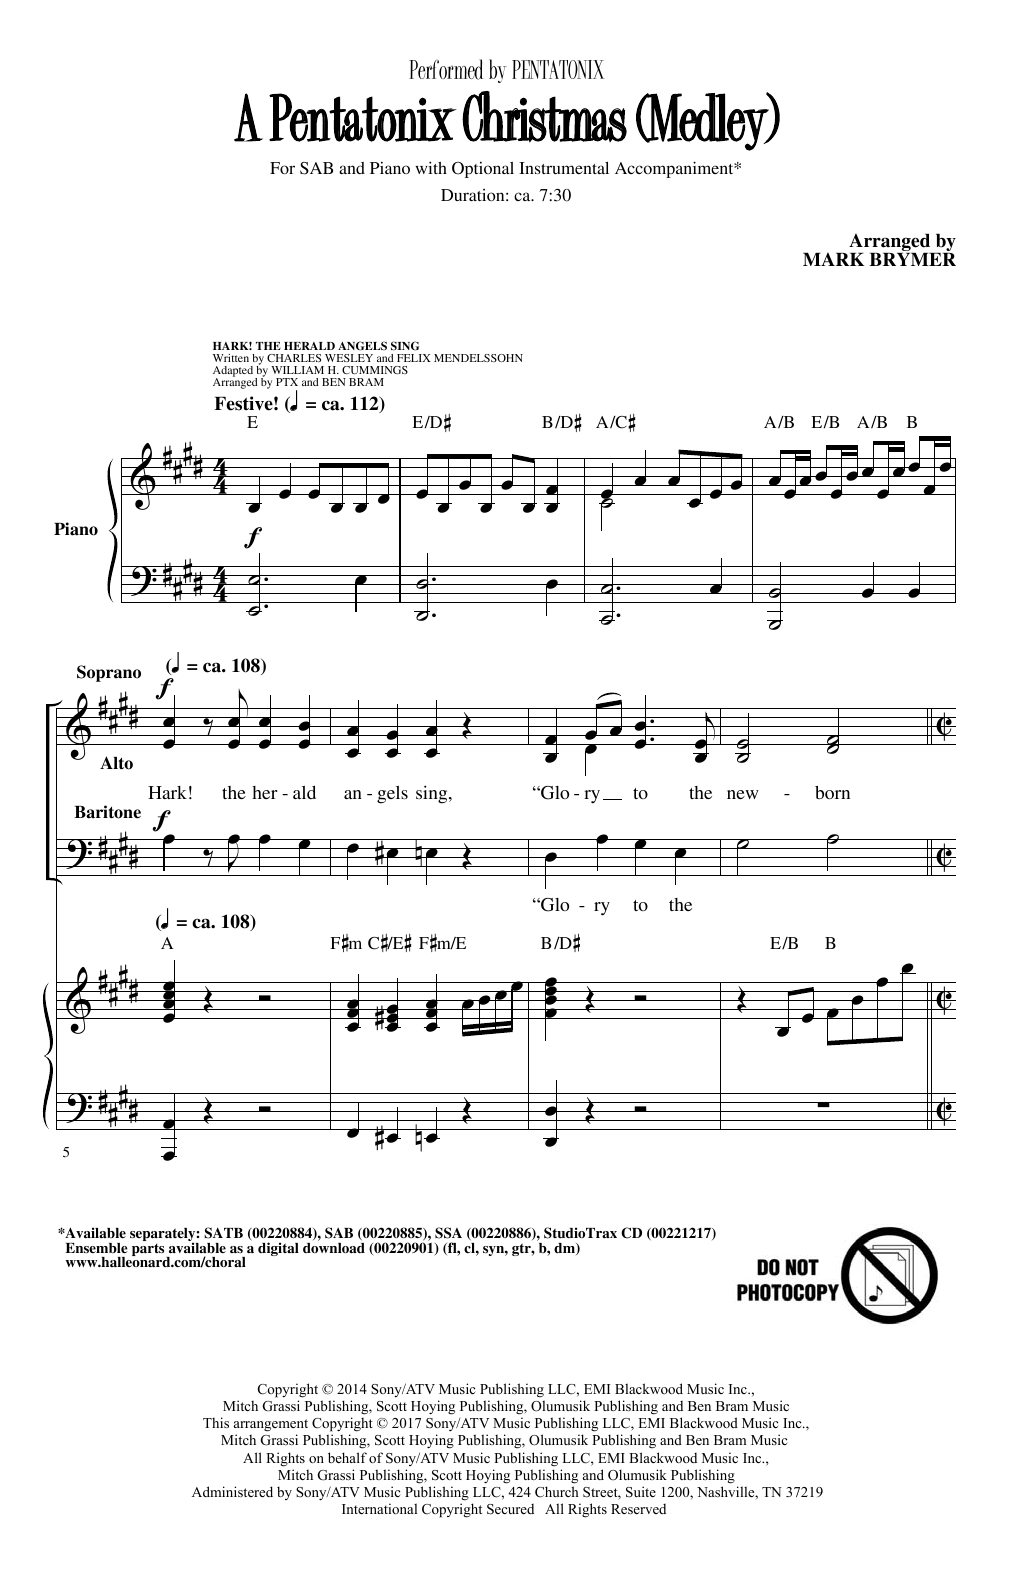 Pentatonix A Pentatonix Christmas (Medley) (arr. Mark Brymer) sheet music notes and chords arranged for SAB Choir